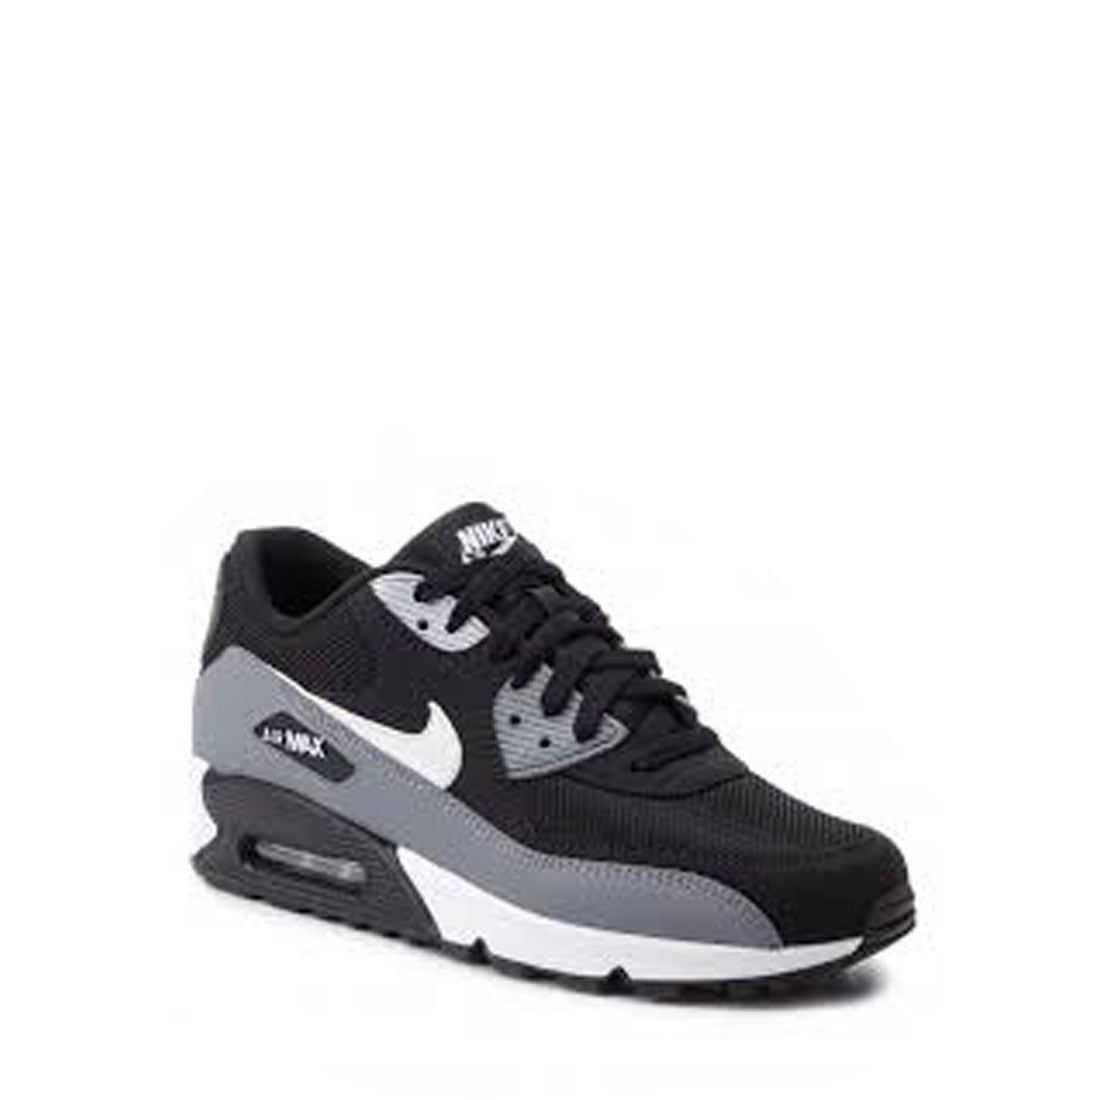 Nike Air Max 90 Men/Adult shoe size 14 